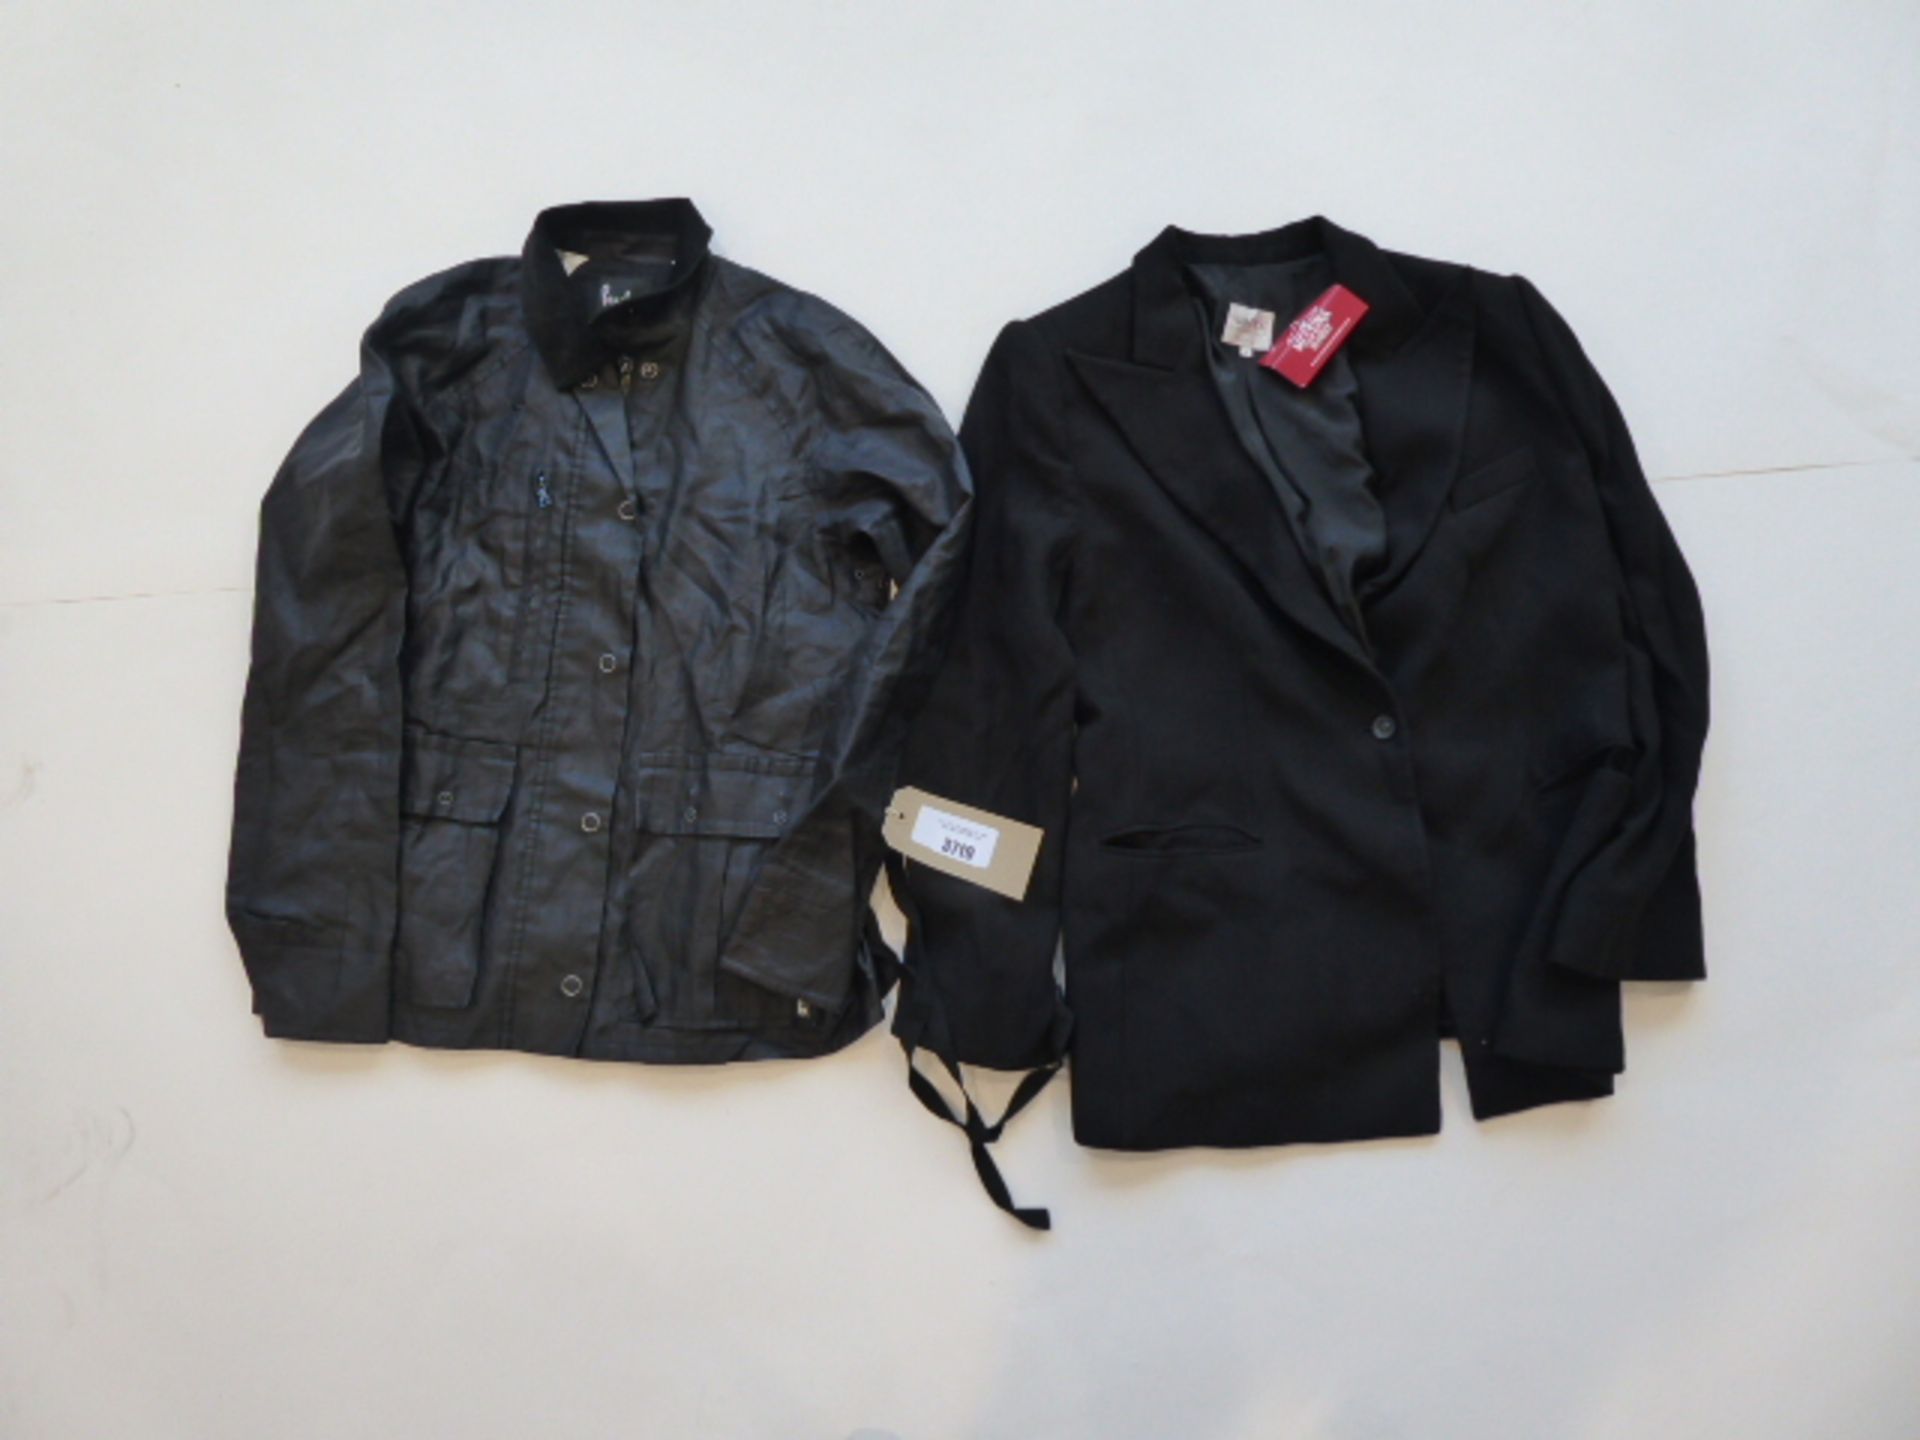 Armani Collezioni black blazer jacket size 50 (used) and Pual x by Paul Smith black jacket size